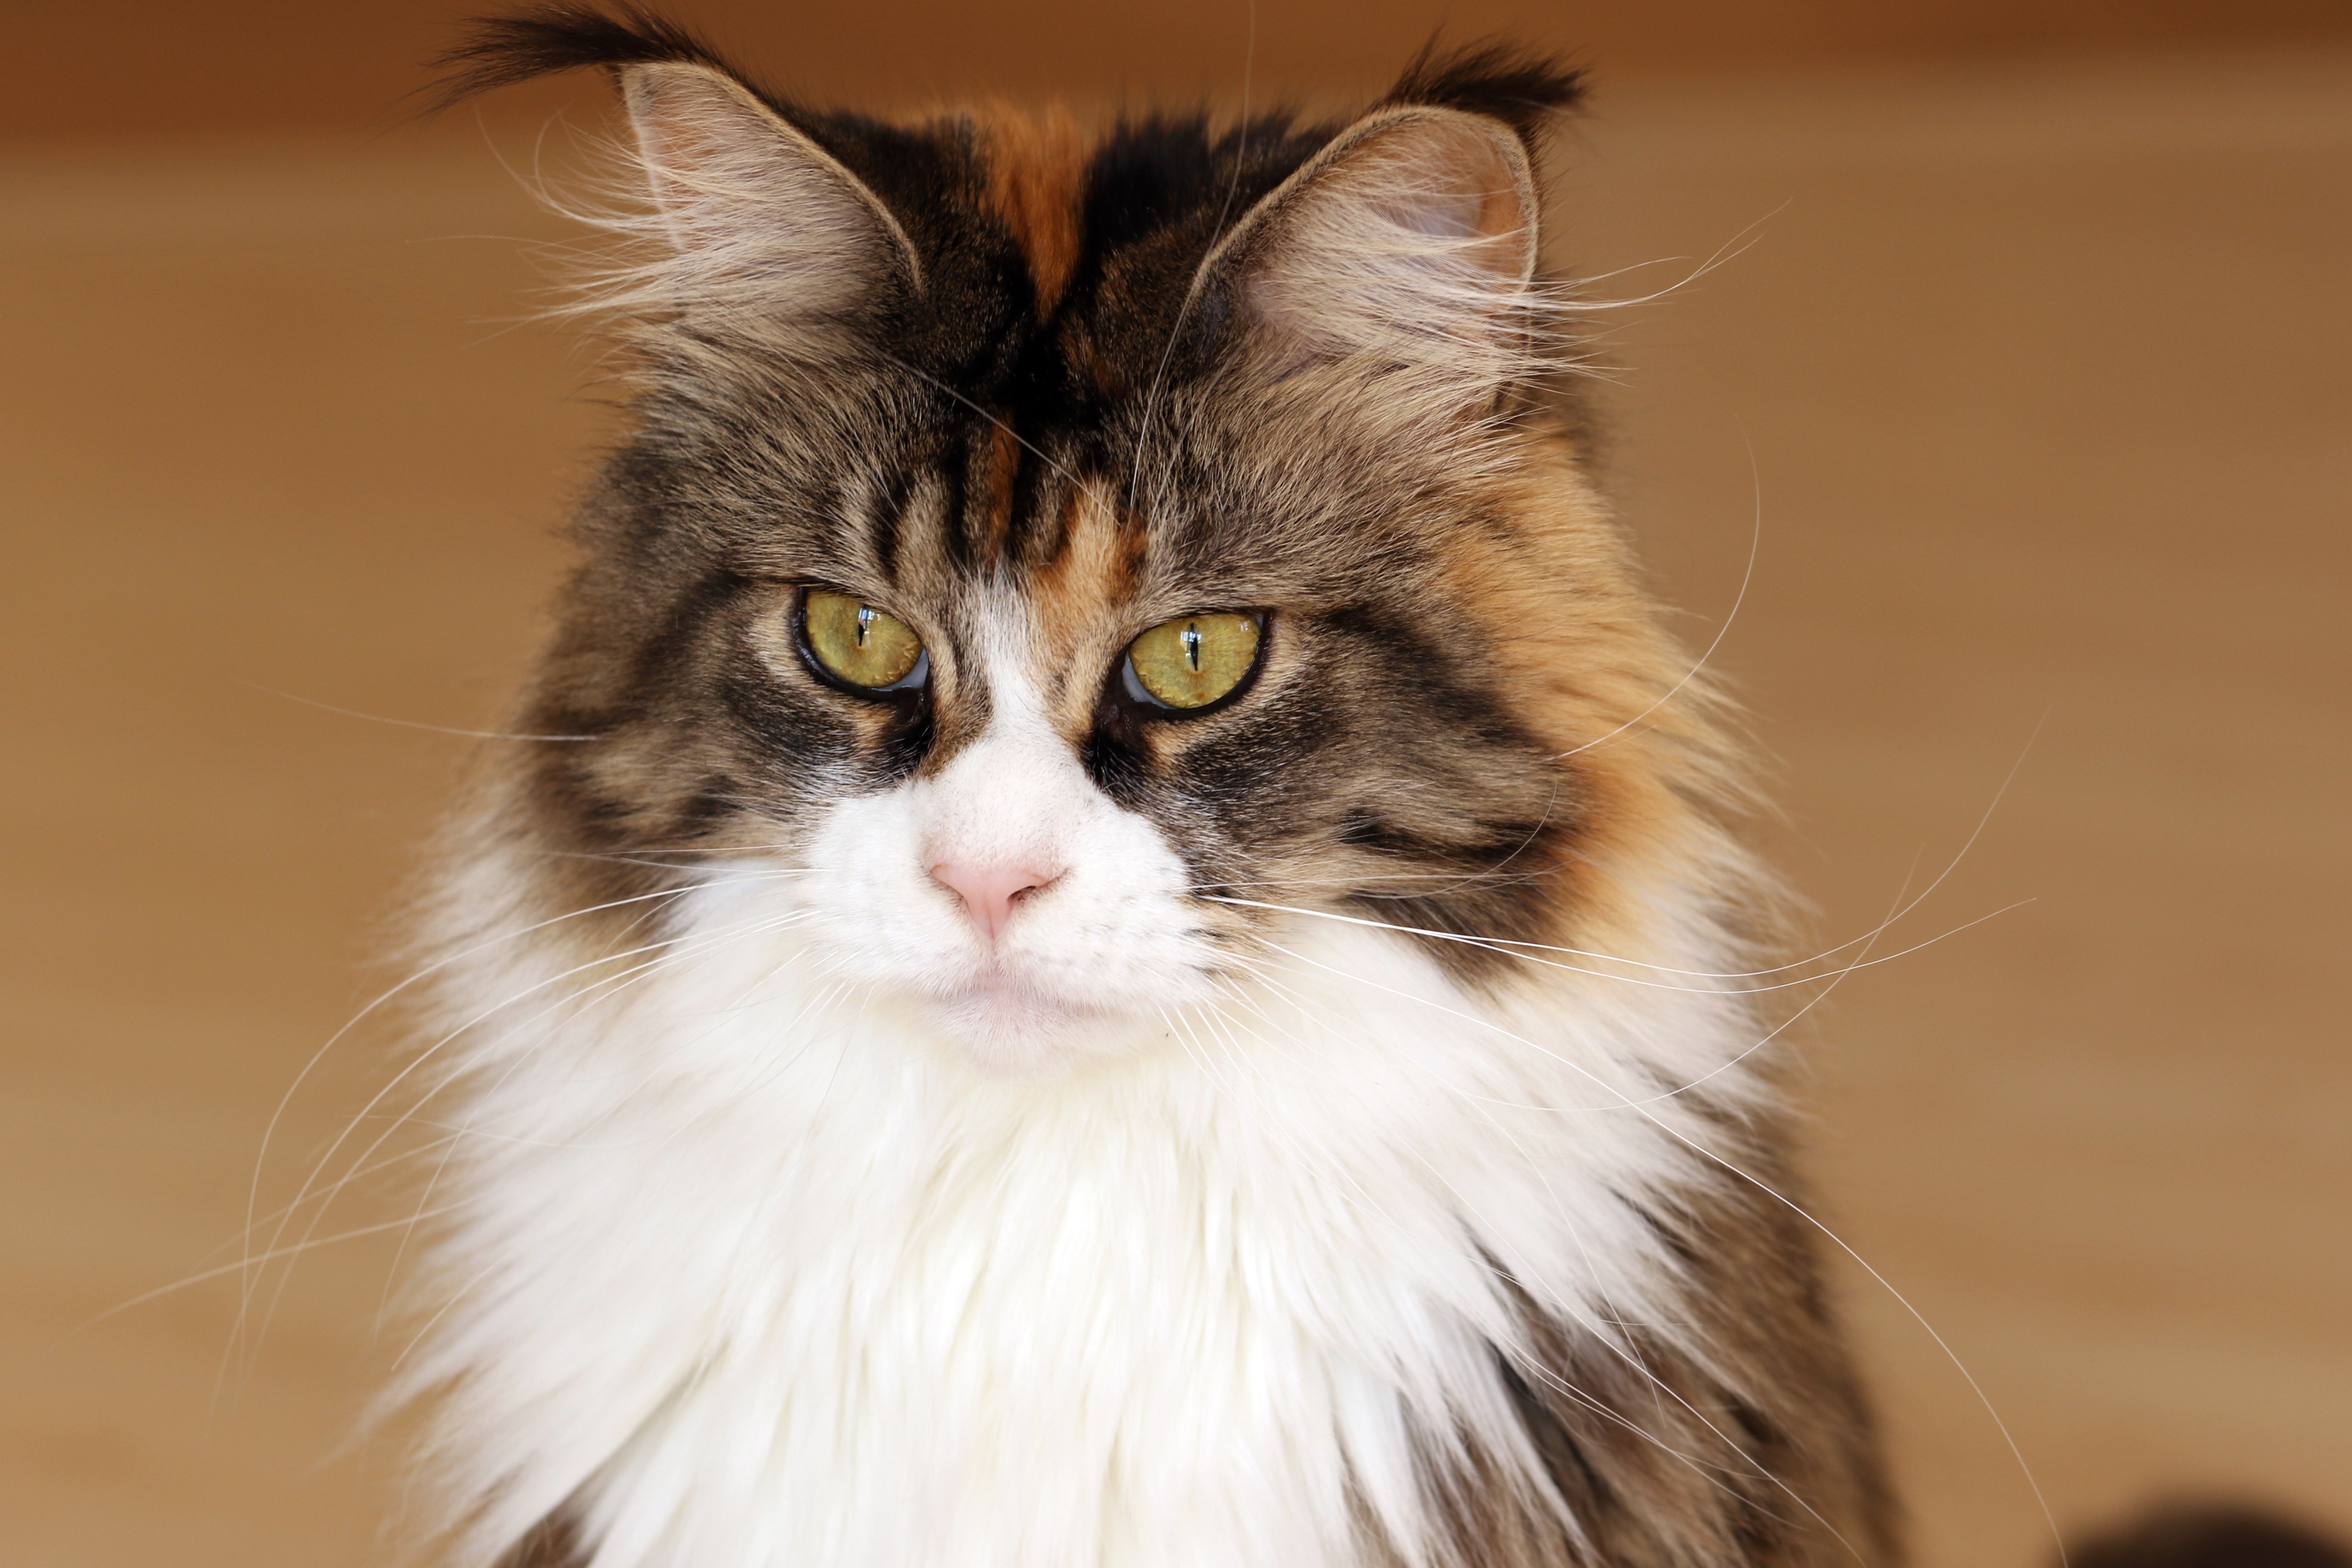 A tricolor cat with long fur